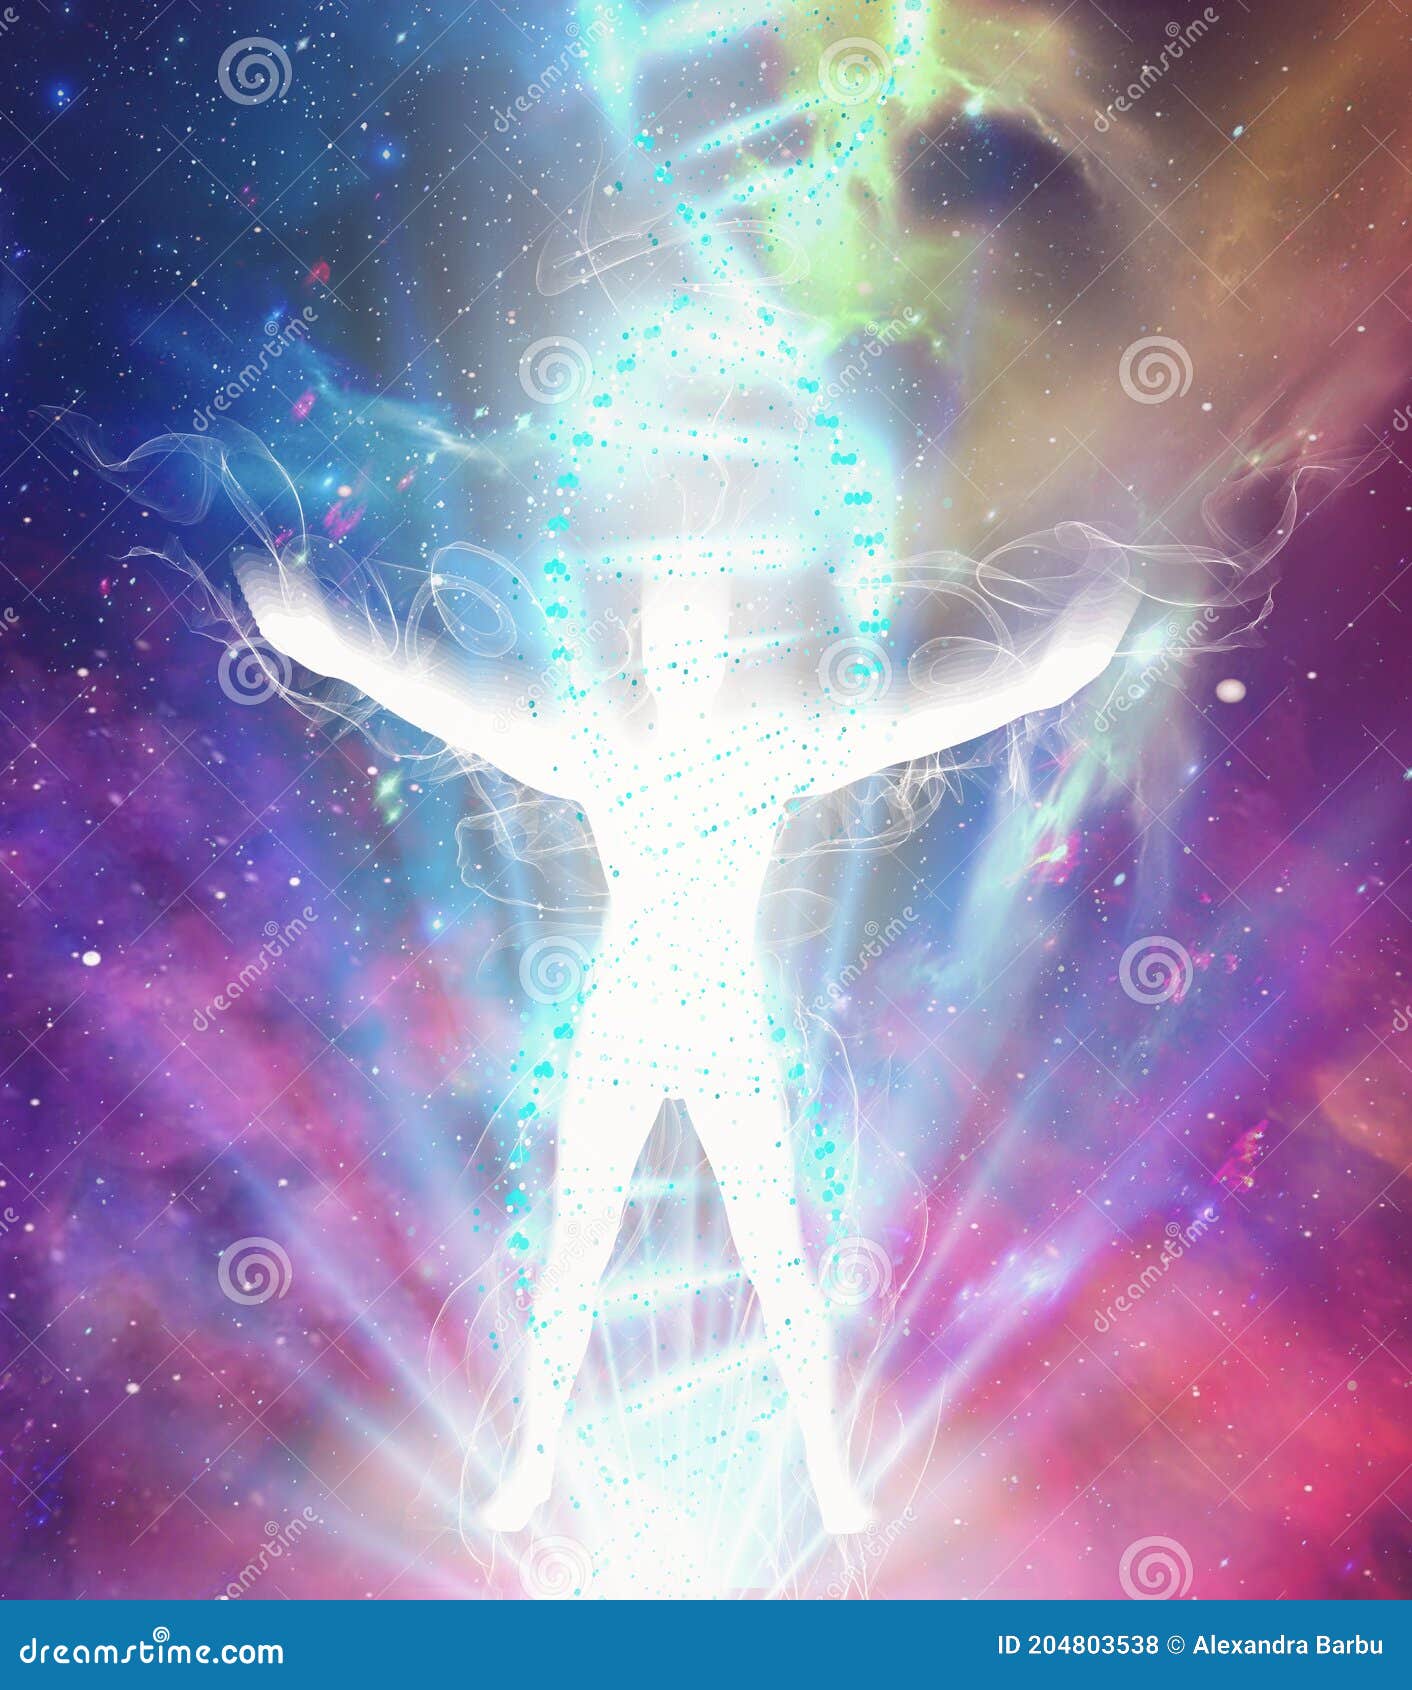 spiritual energy power, violet flame power, dna spiral, universe portal